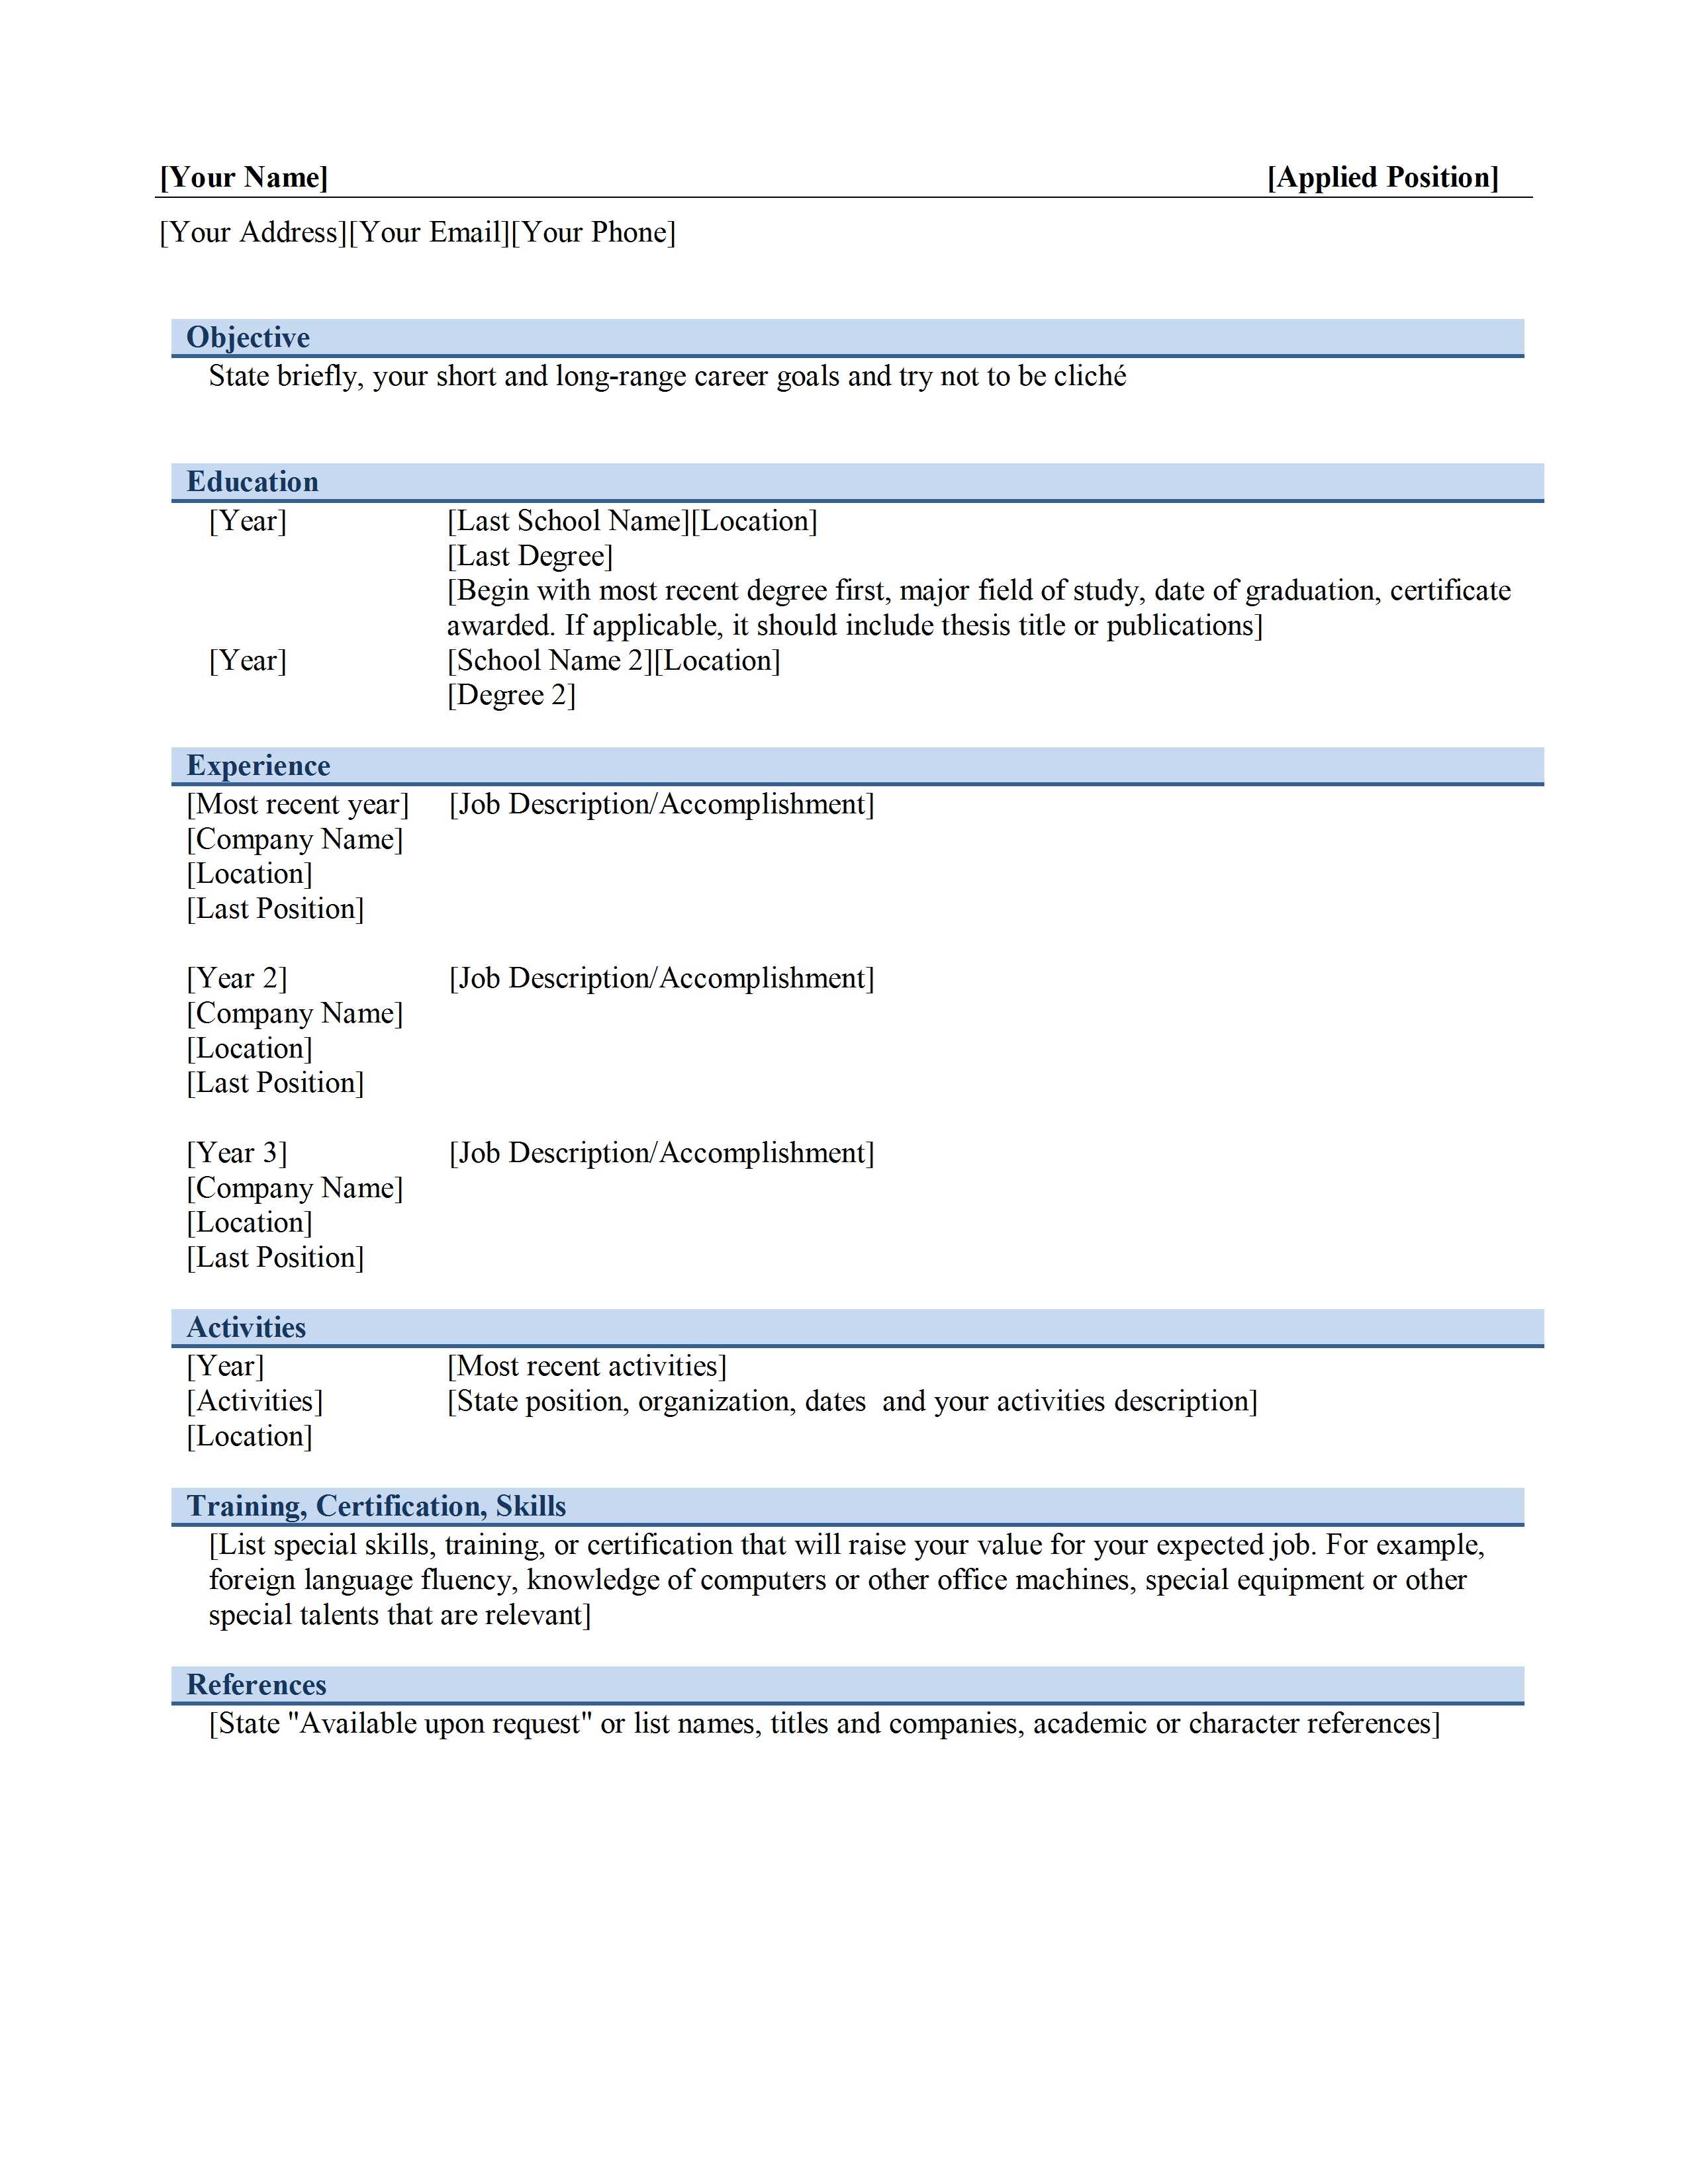 Sample Resume Ms Word Resume Template John Smith Resume With Regard To Free Basic Resume Templates Microsoft Word